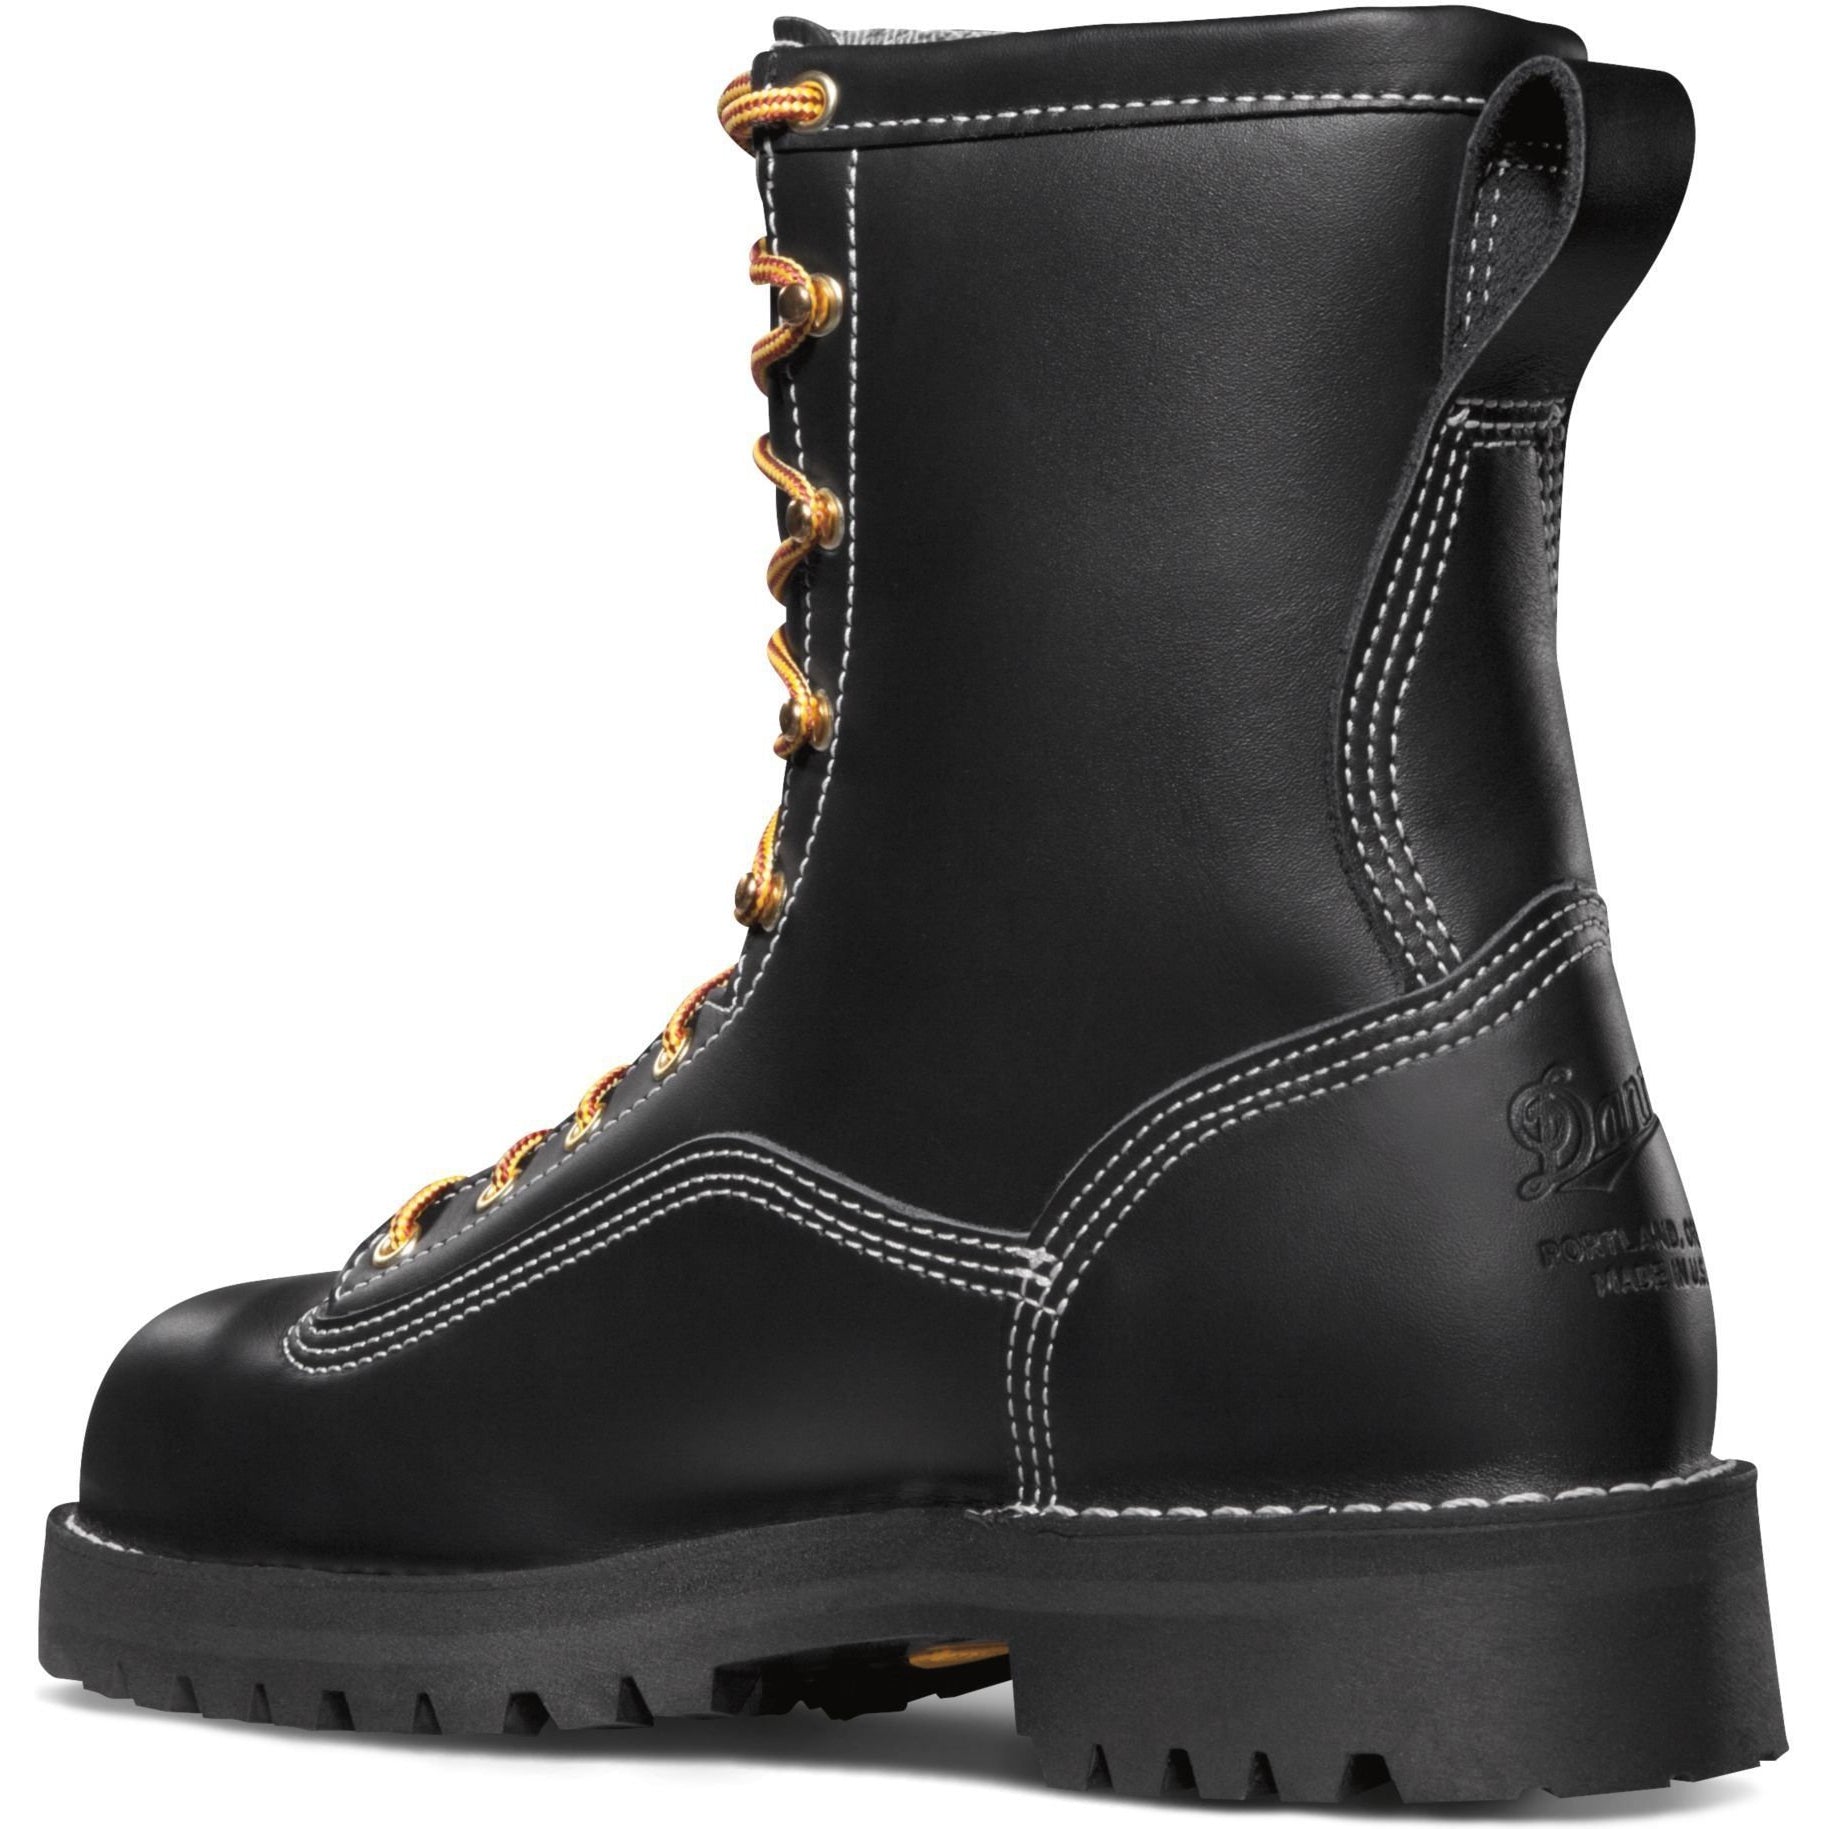 Danner Men's Rain Forest USA Made 8" Soft Toe WP Work Boot Black 11500  - Overlook Boots